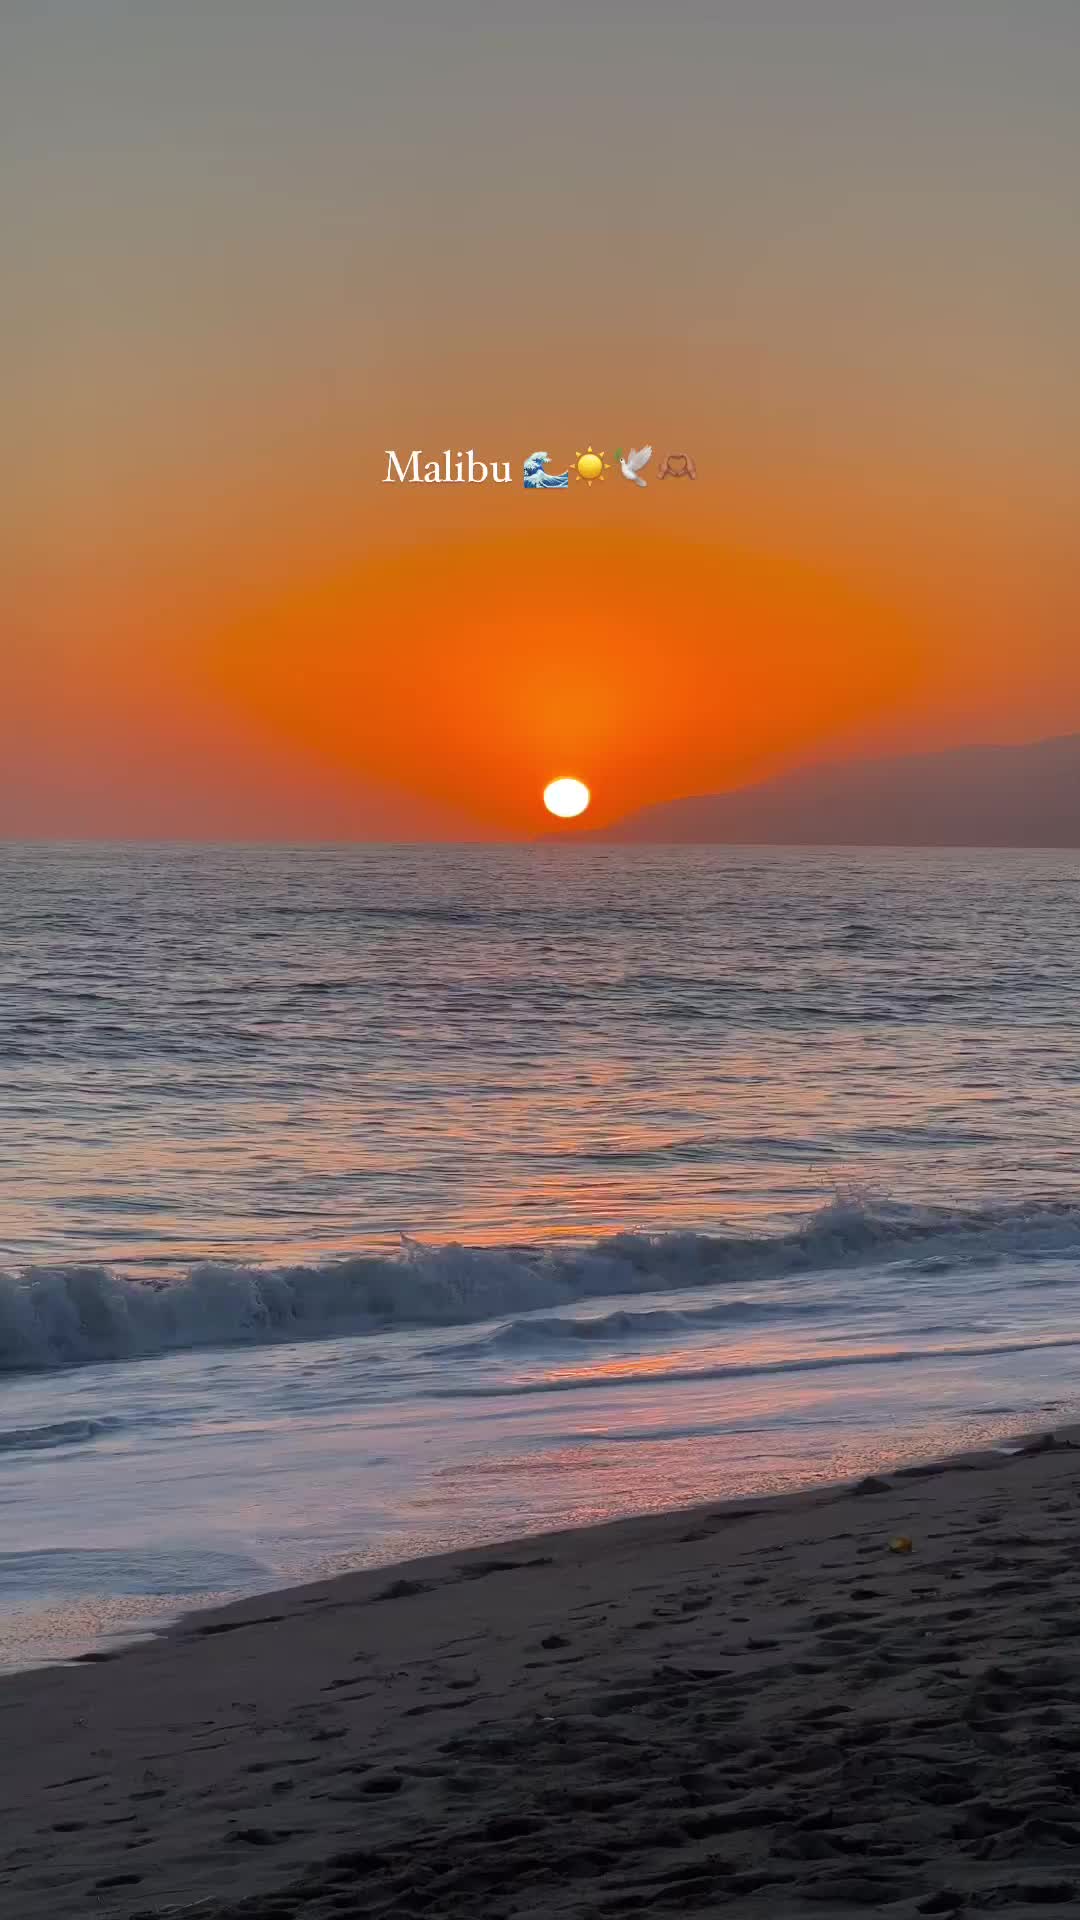 Malibu Beach Sunset: A Tranquil Ocean Escape